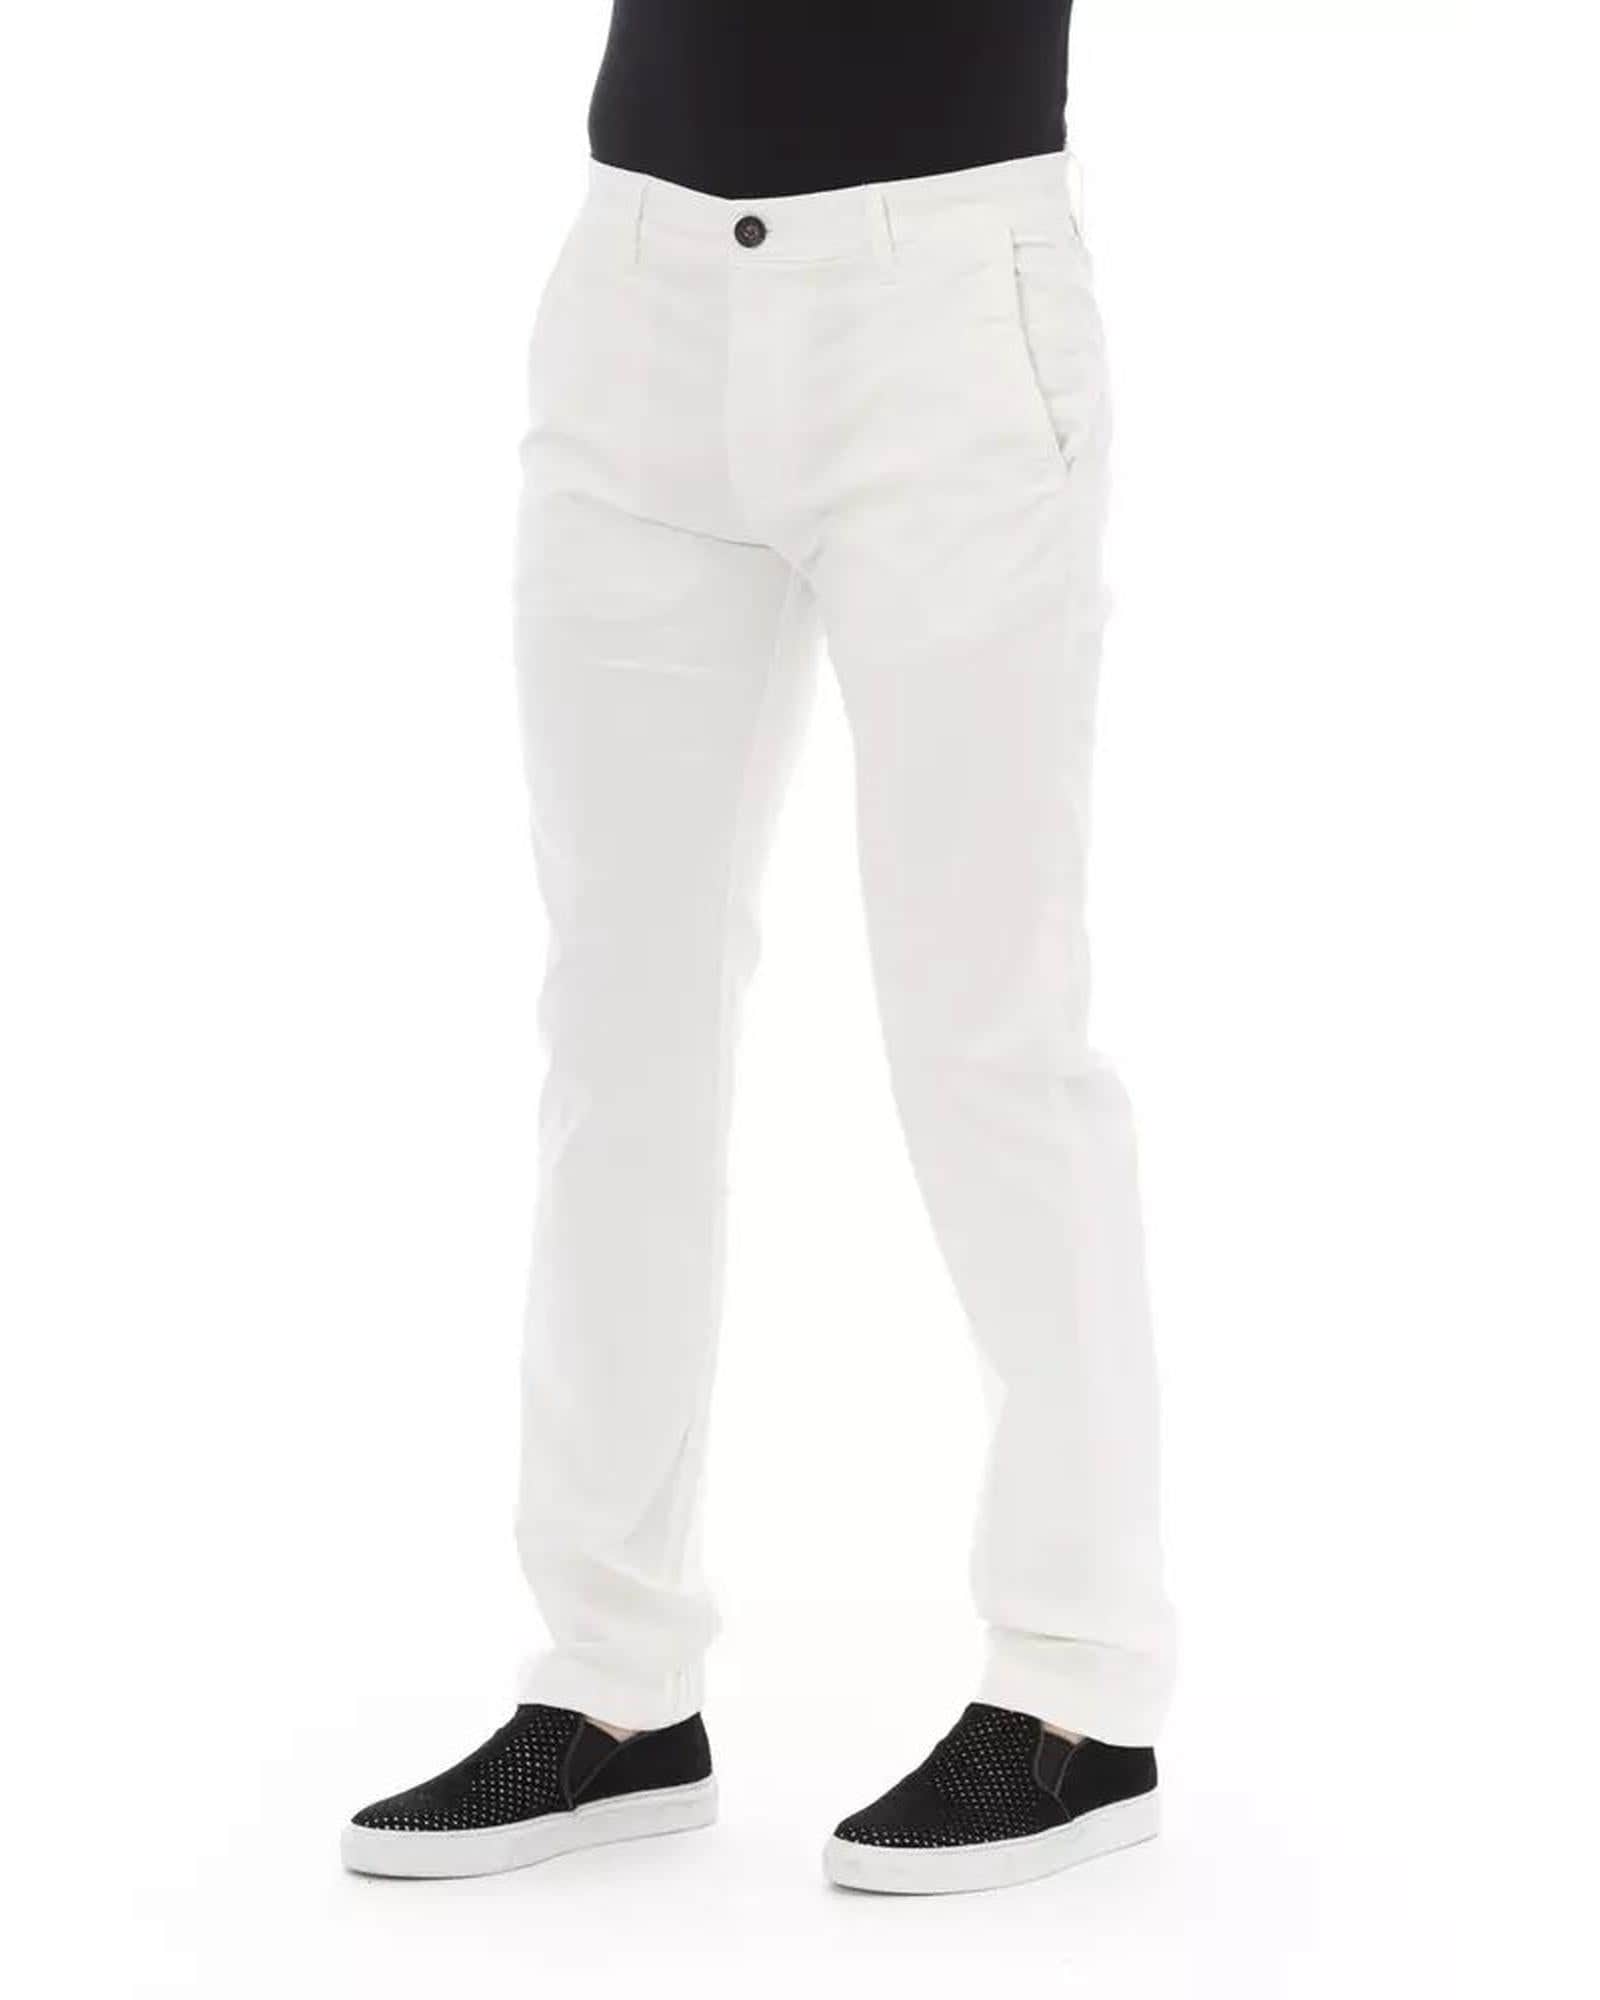 Classic Baldinini Trend Men's White Cotton Jeans & Pant